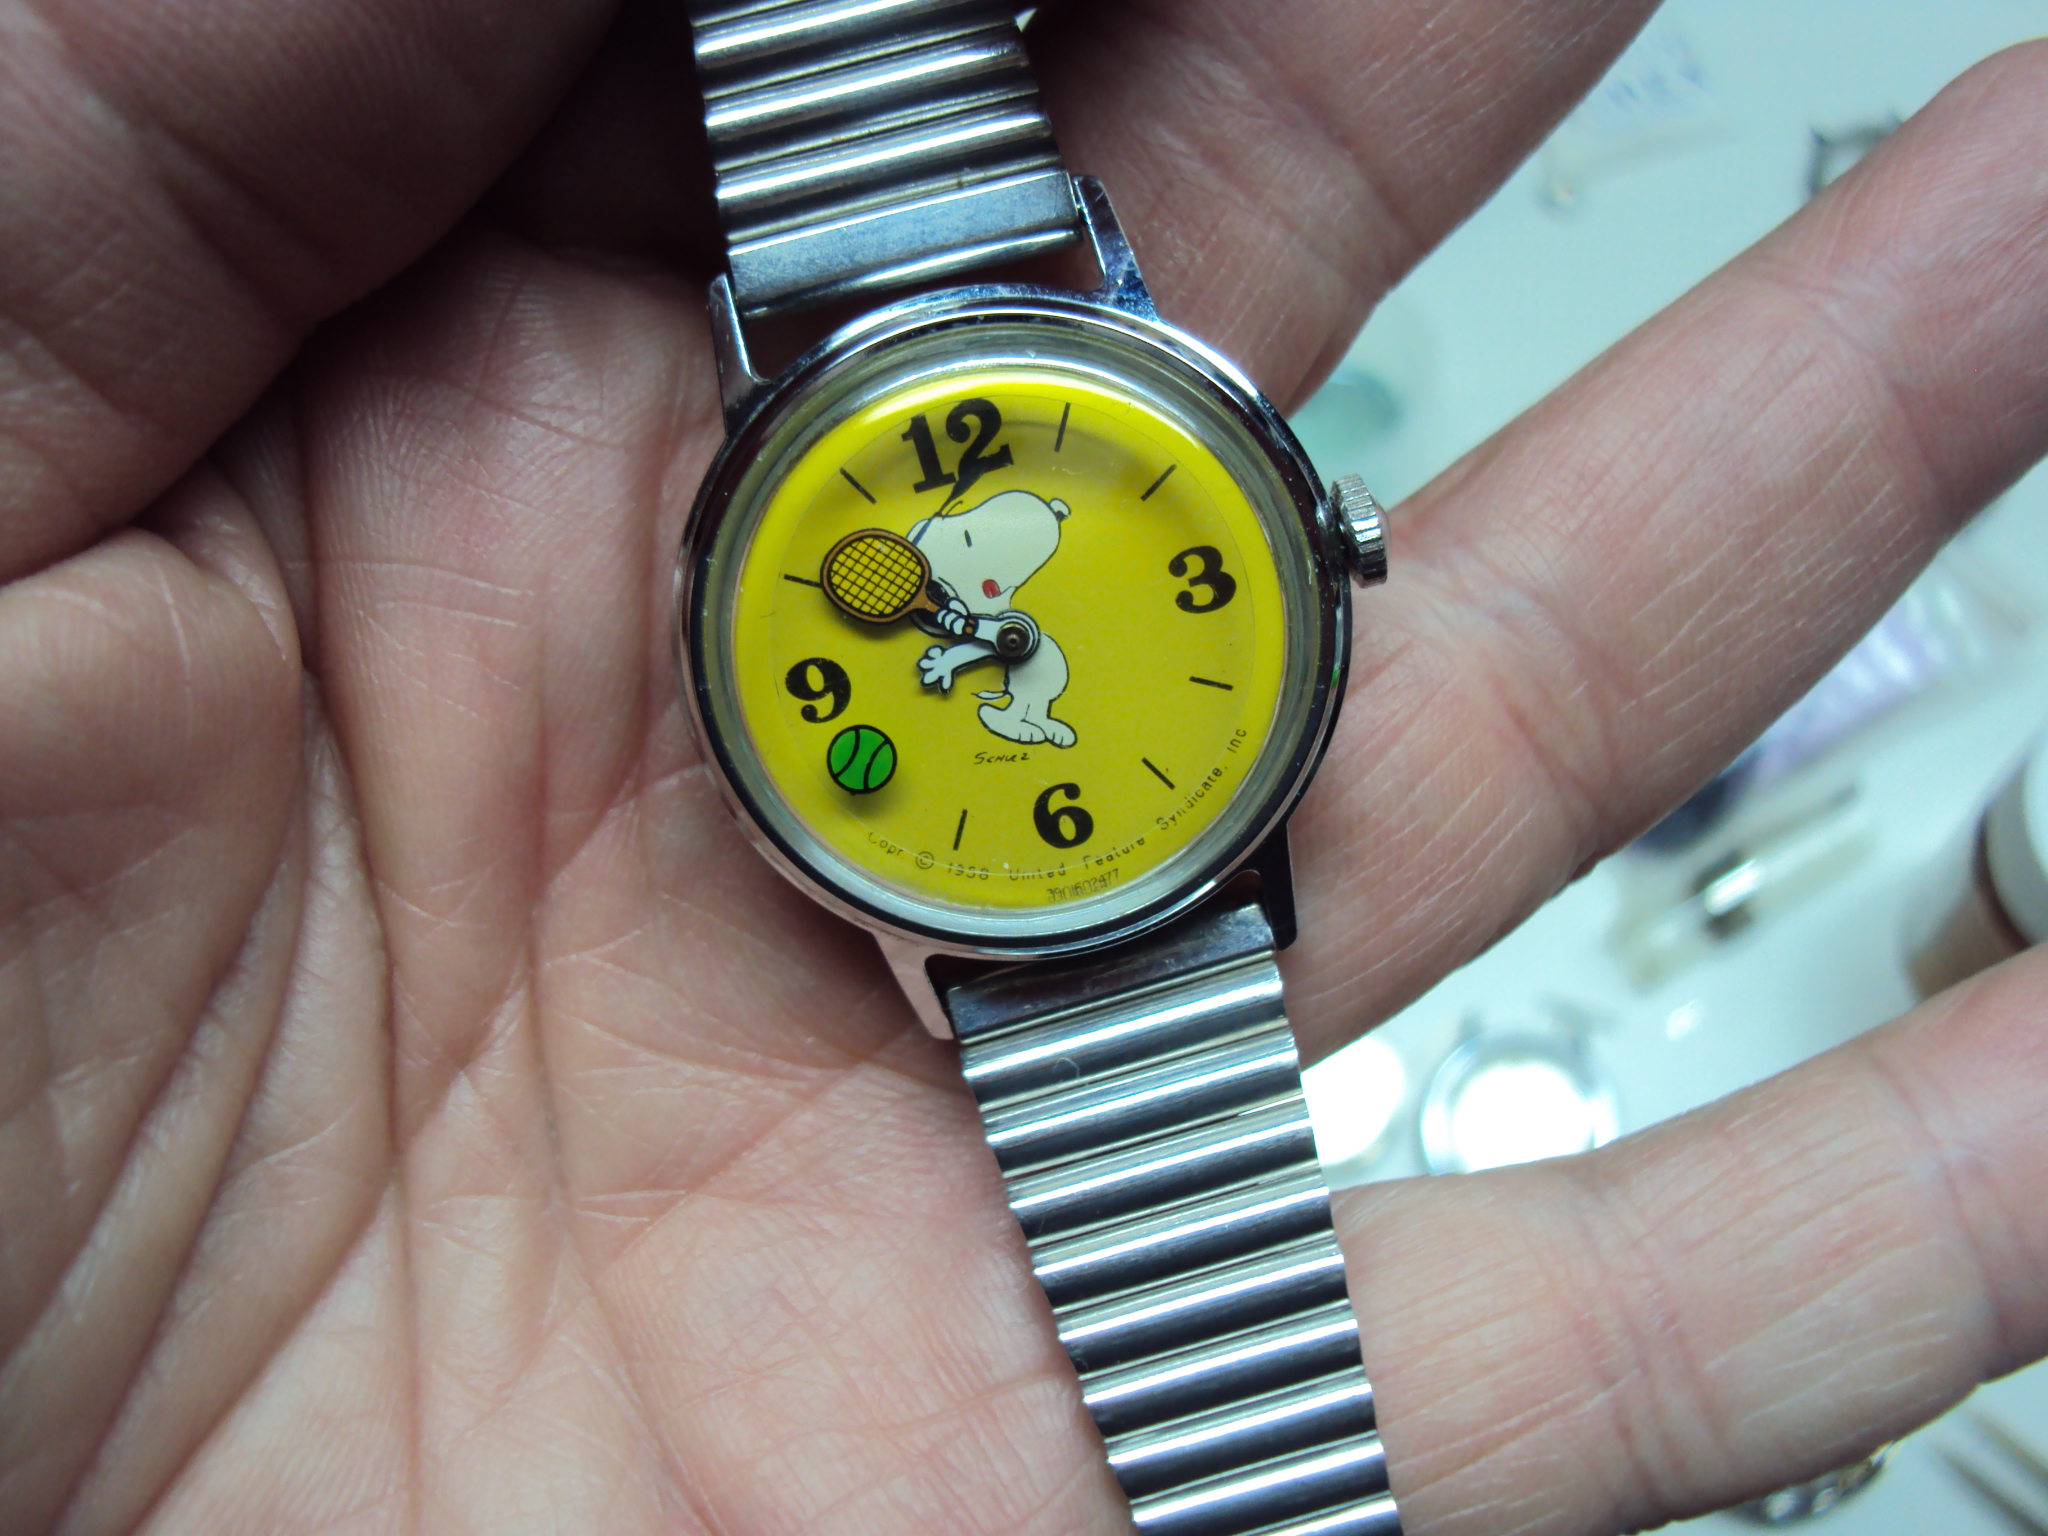 Timex snoopy second hand - Watch Repairs Help & Advice - Watch Repair Talk